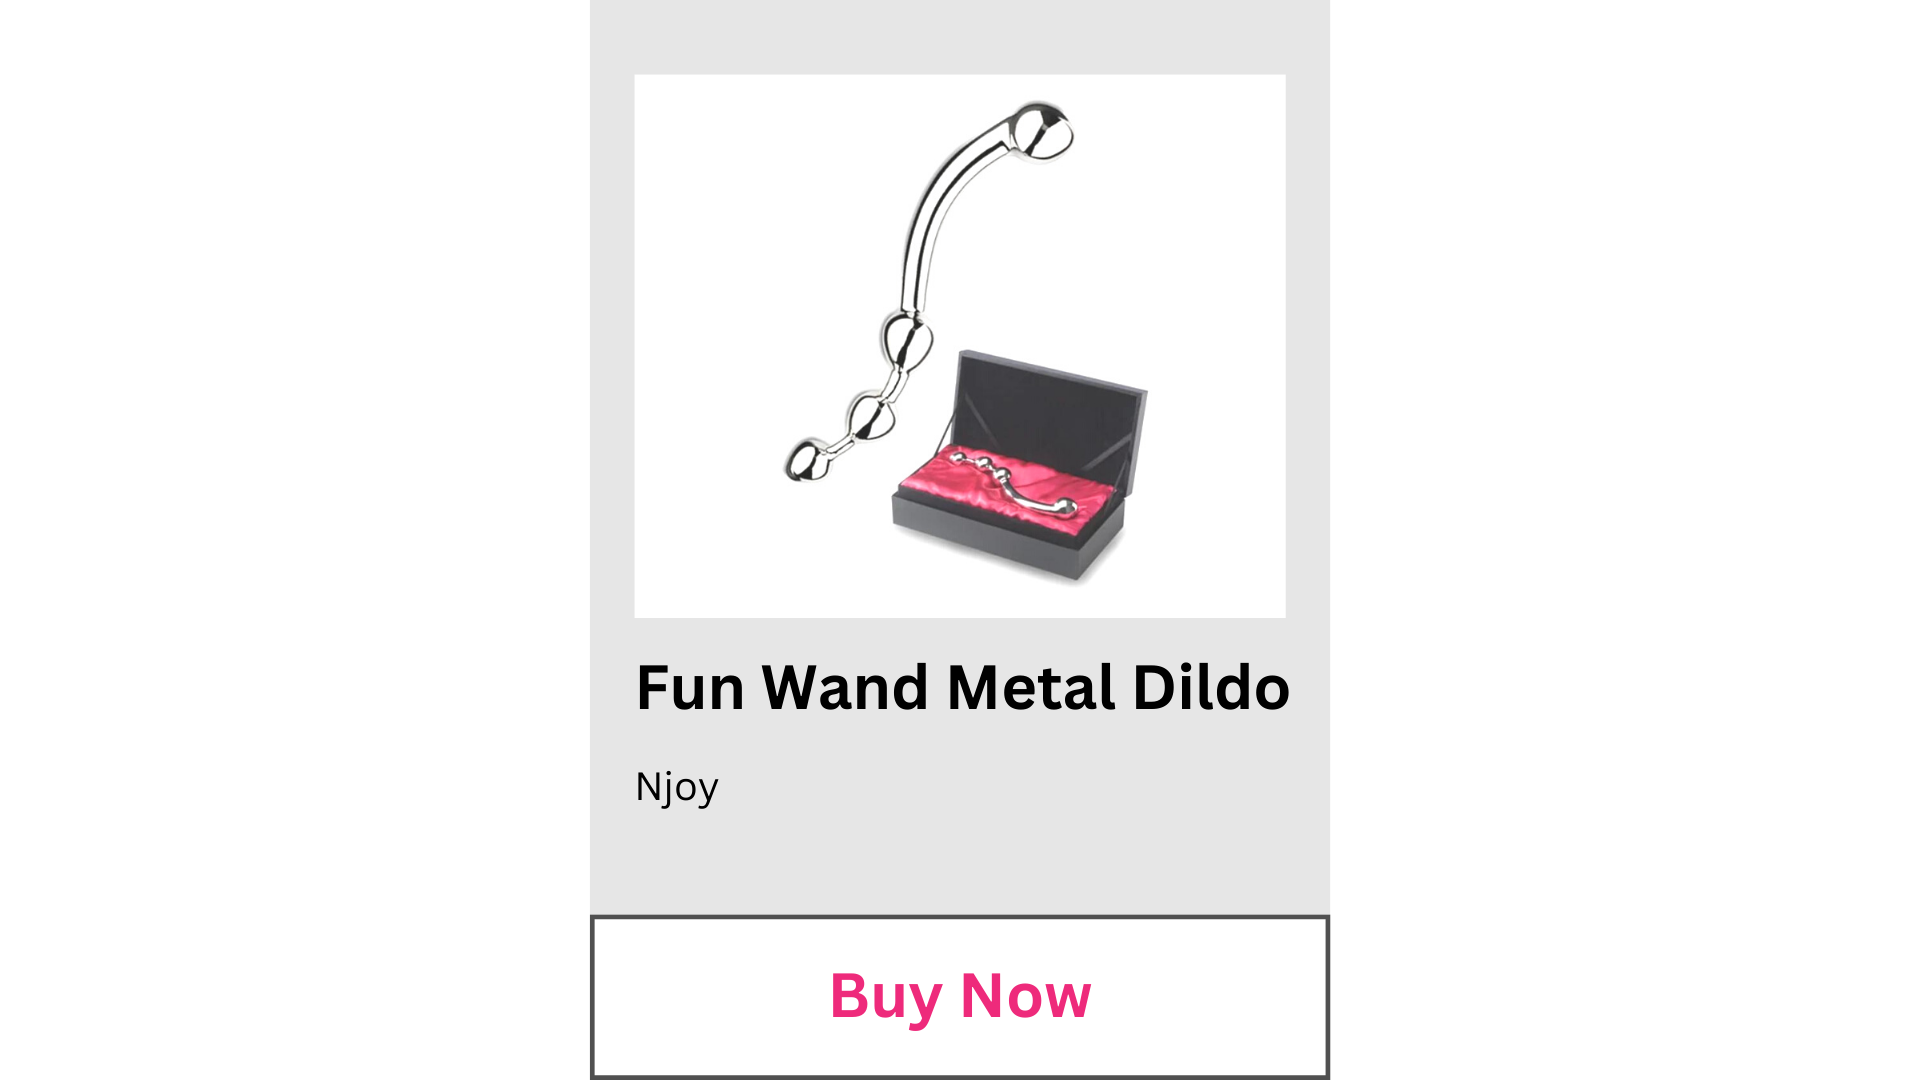 Buy the Fun Wand Metal Dildo from Njoy.